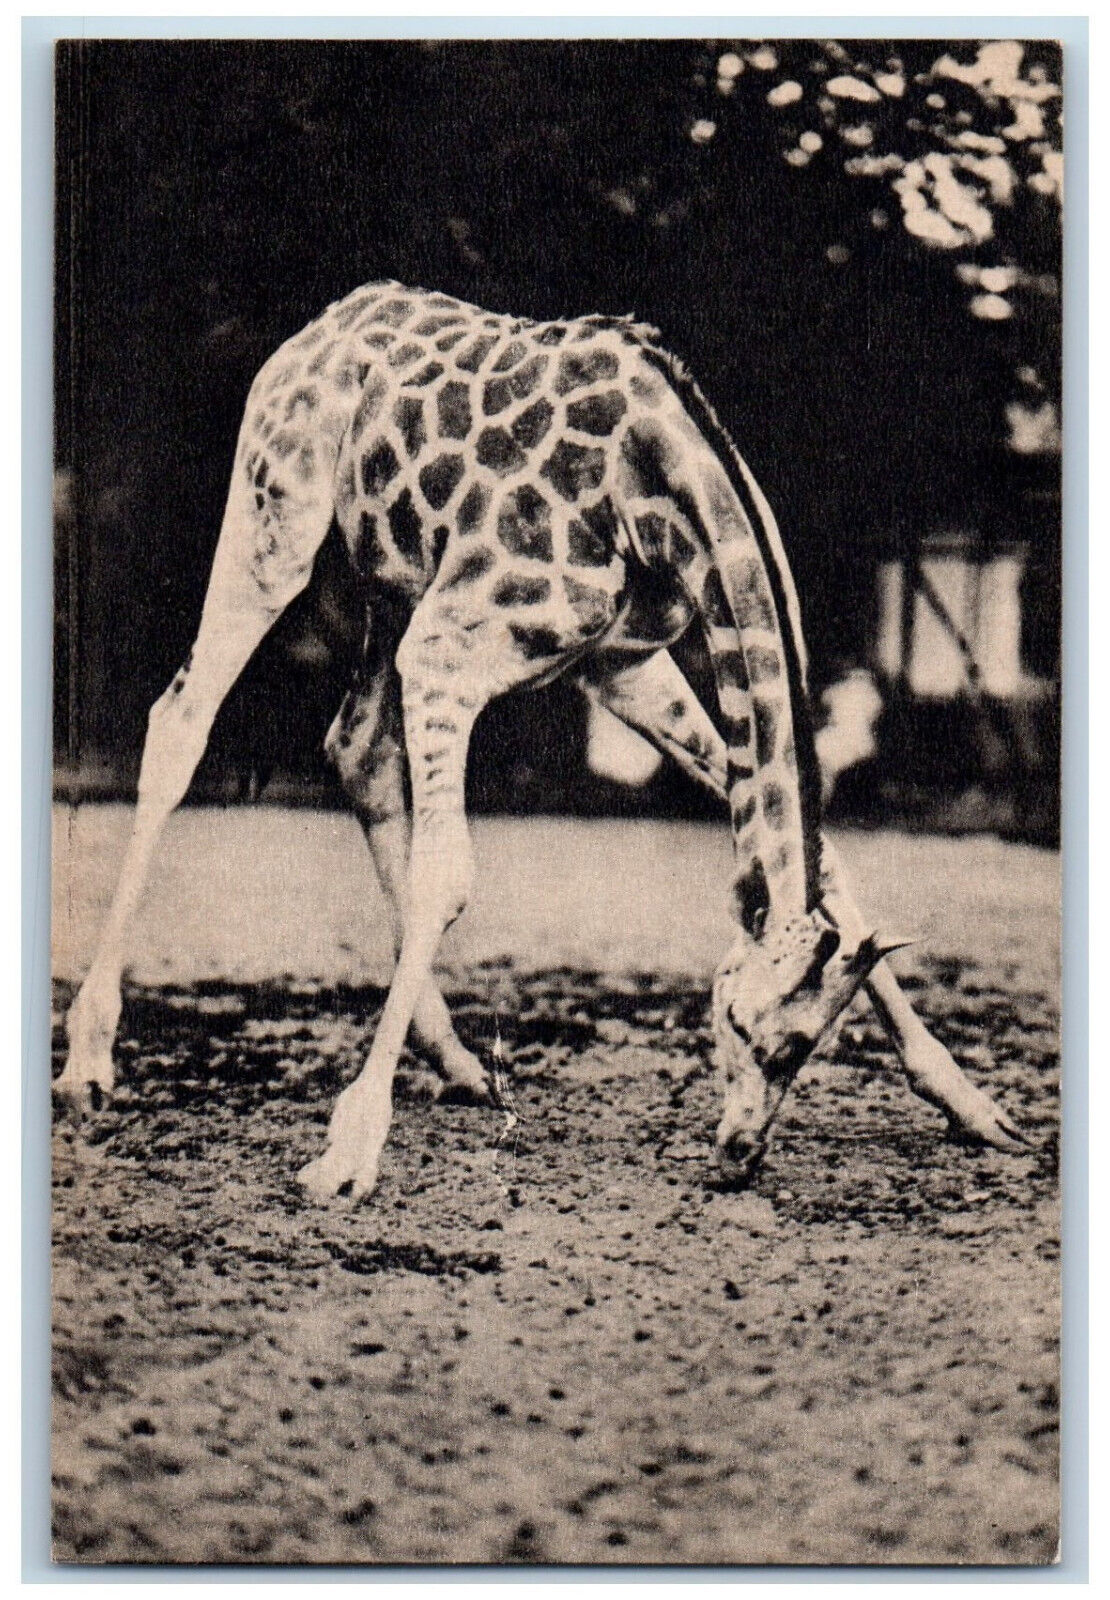 Ueno Japan Postcard View of Giraffe Exhibit 1933 Vintage Unposted